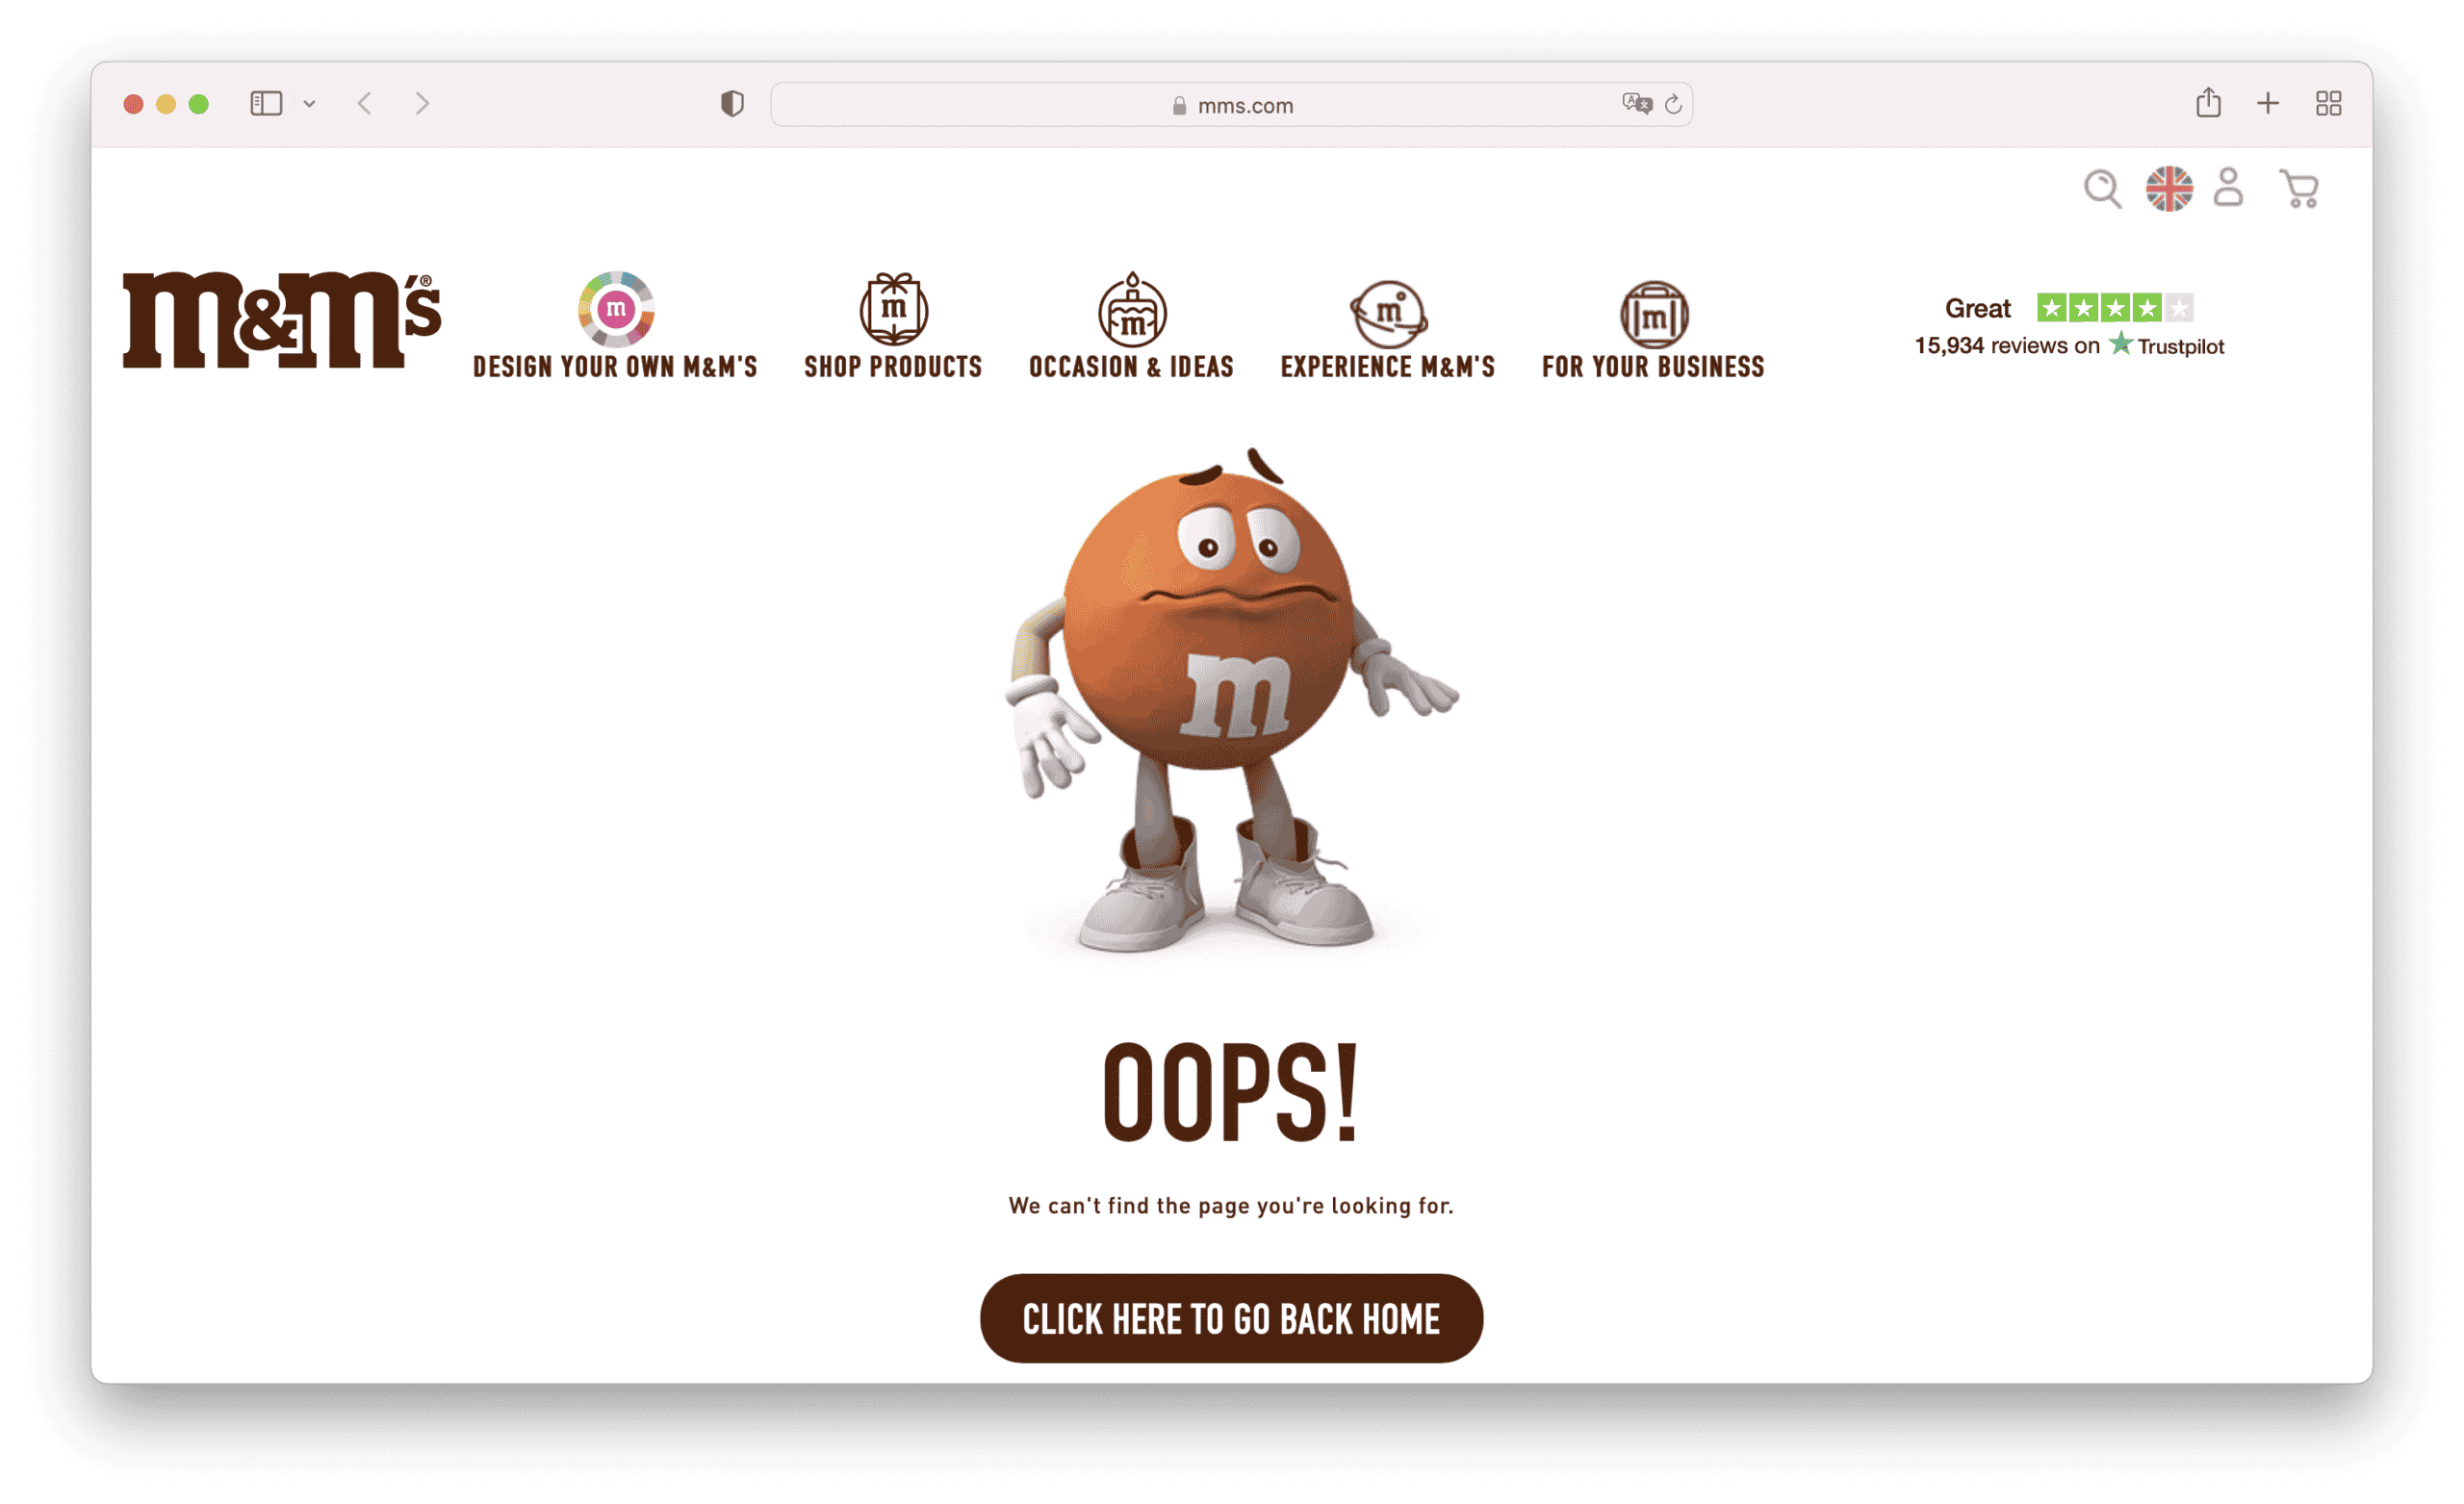 mms.com 404 page